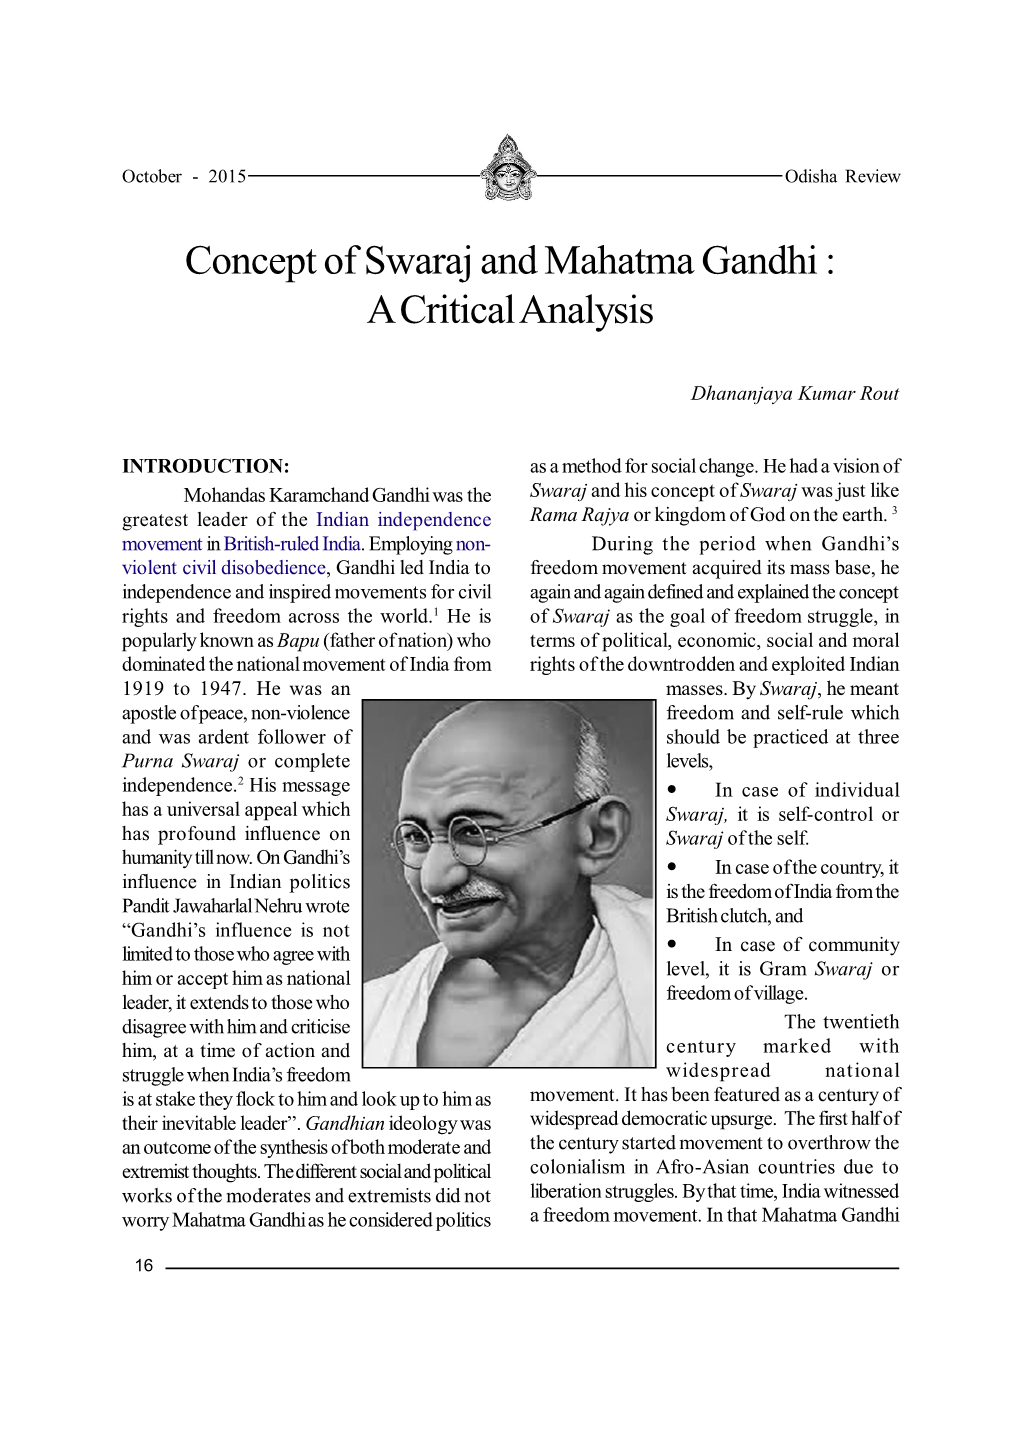 Concept of Swaraj and Mahatma Gandhi : a Critical Analysis